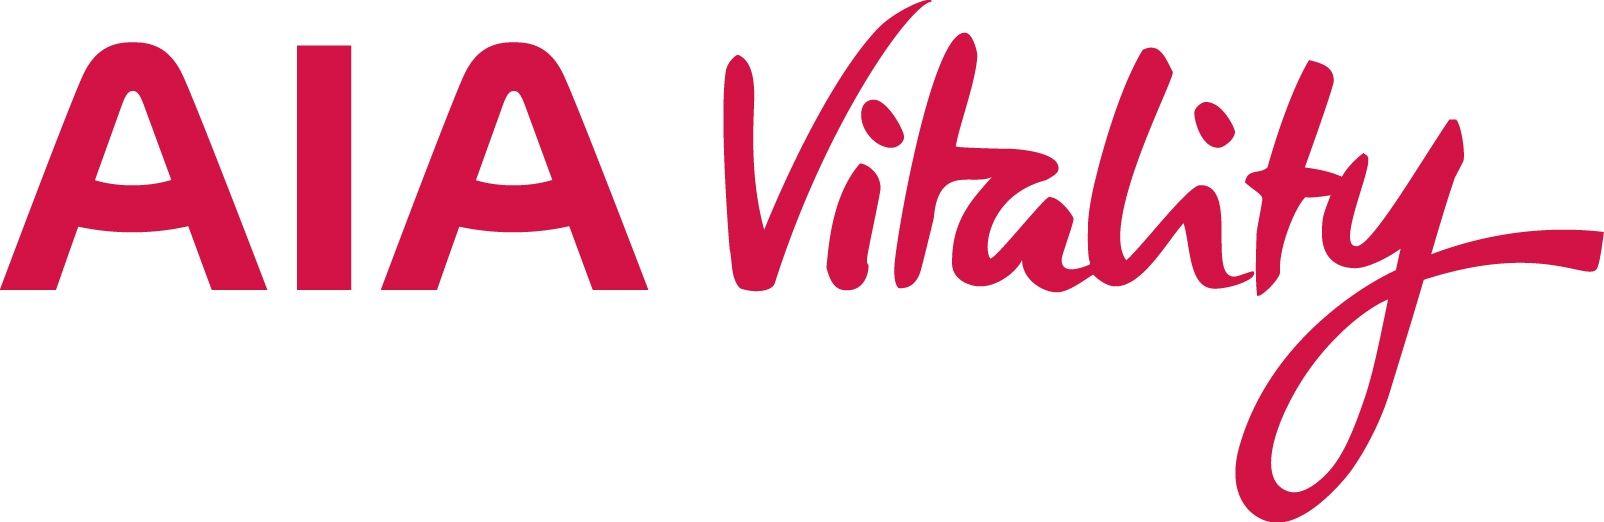 AIA Logo - AIA Logo Vector (.AI) Free Download | Aia | Wellness programs ...